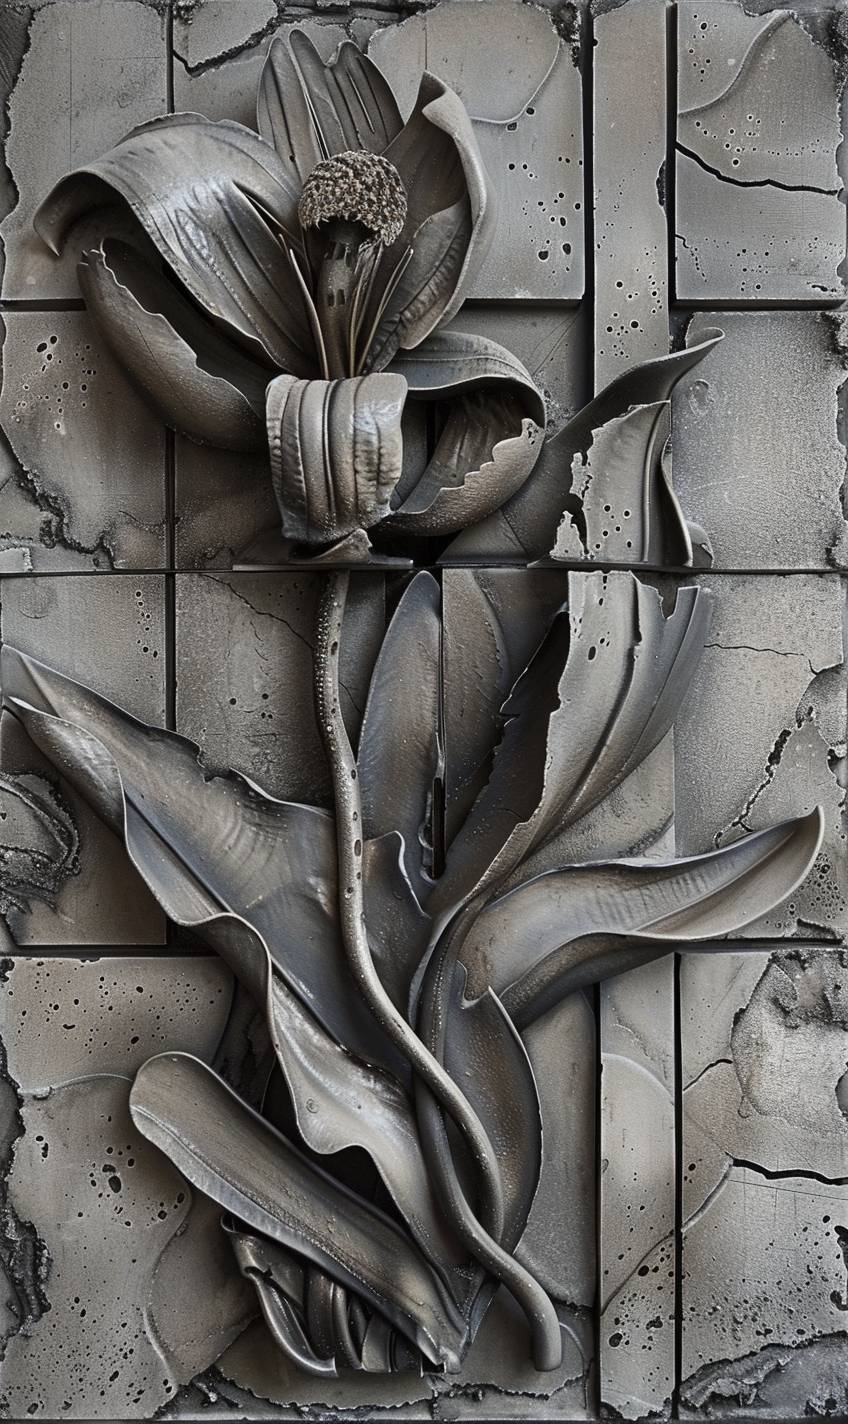 Colored bas-relief depicting alien flower growing though concrete brutalist buildings